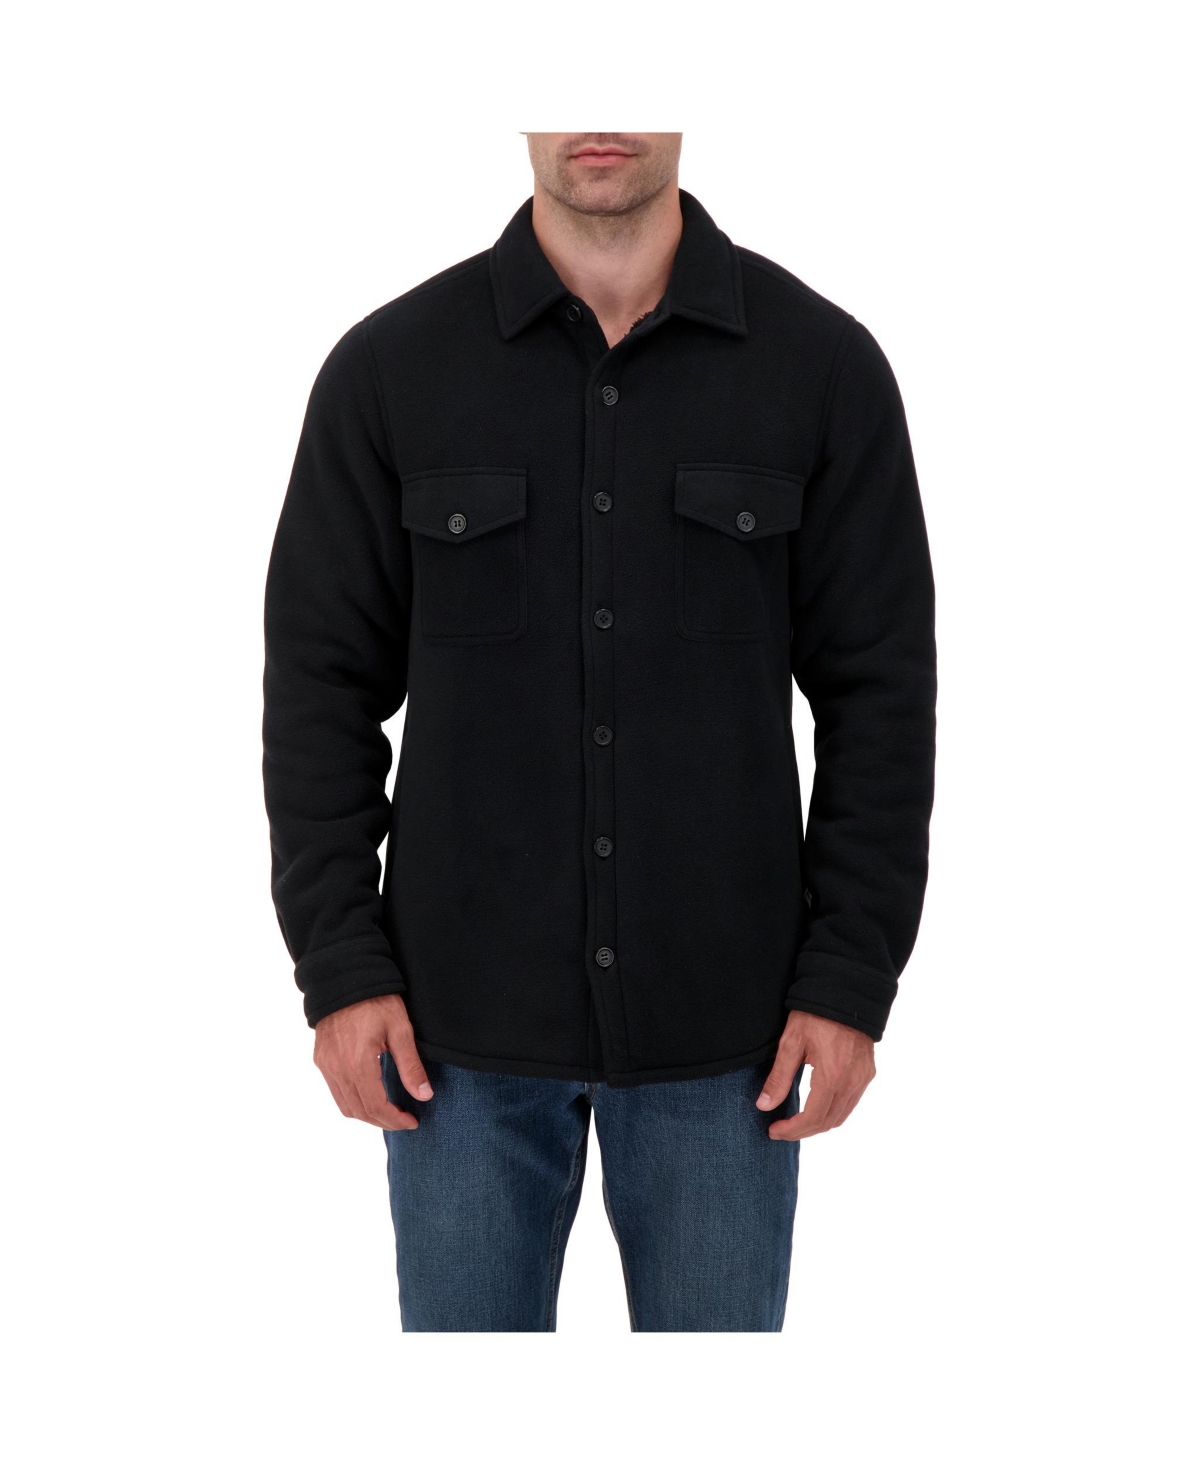 Men's Jax Long Sleeve Solid Shirt Jacket - Black